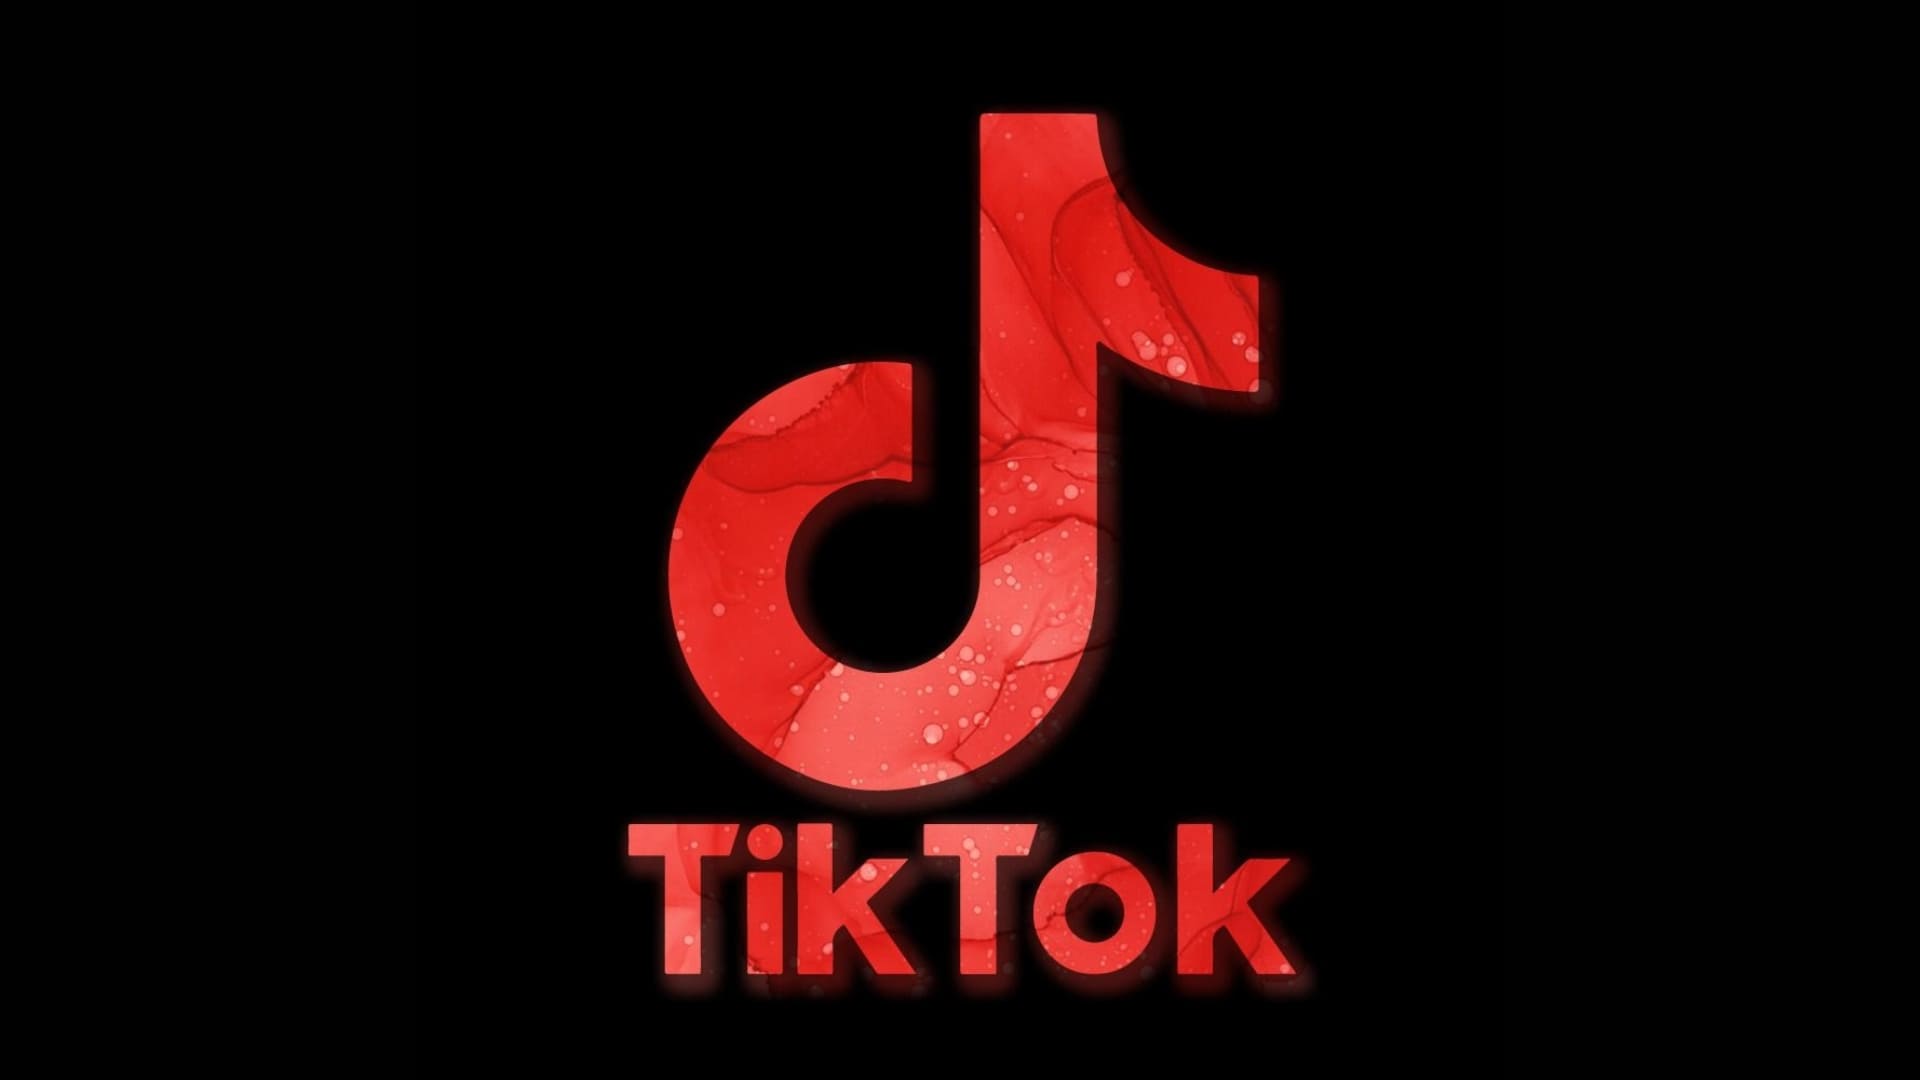 Tiktok wallpaper HD free Tiktok background